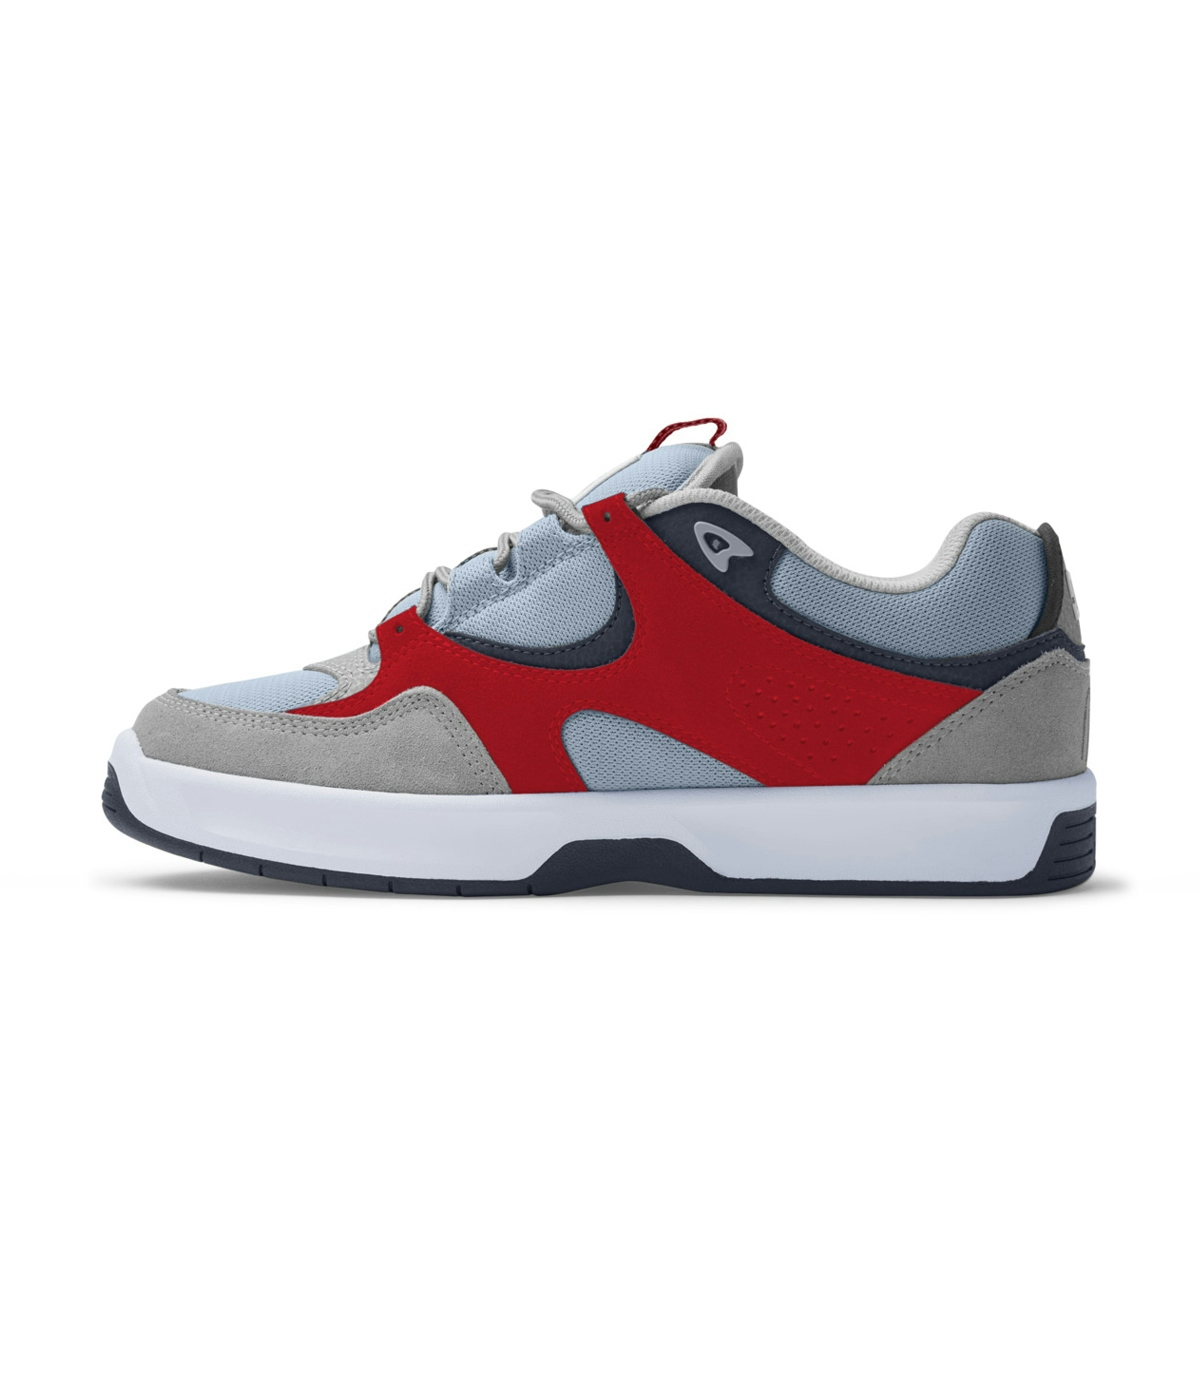 DC Shoes Kalynx Zero S Shoes Grey/Red 2